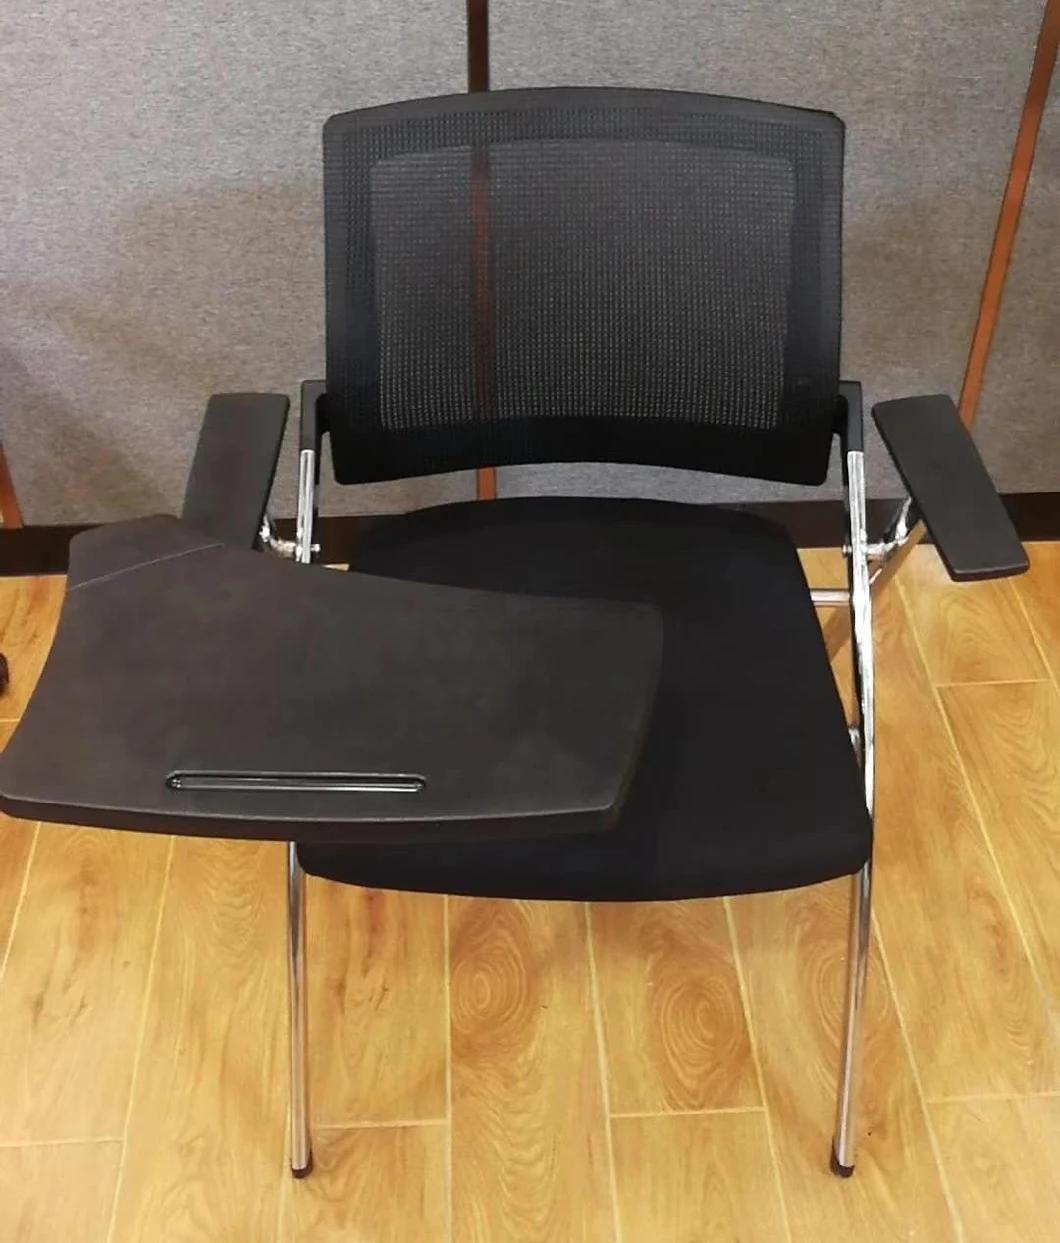 2021 Wholesale Chrome Steel Metal School Training Folding Mesh Chair with Writing Pad